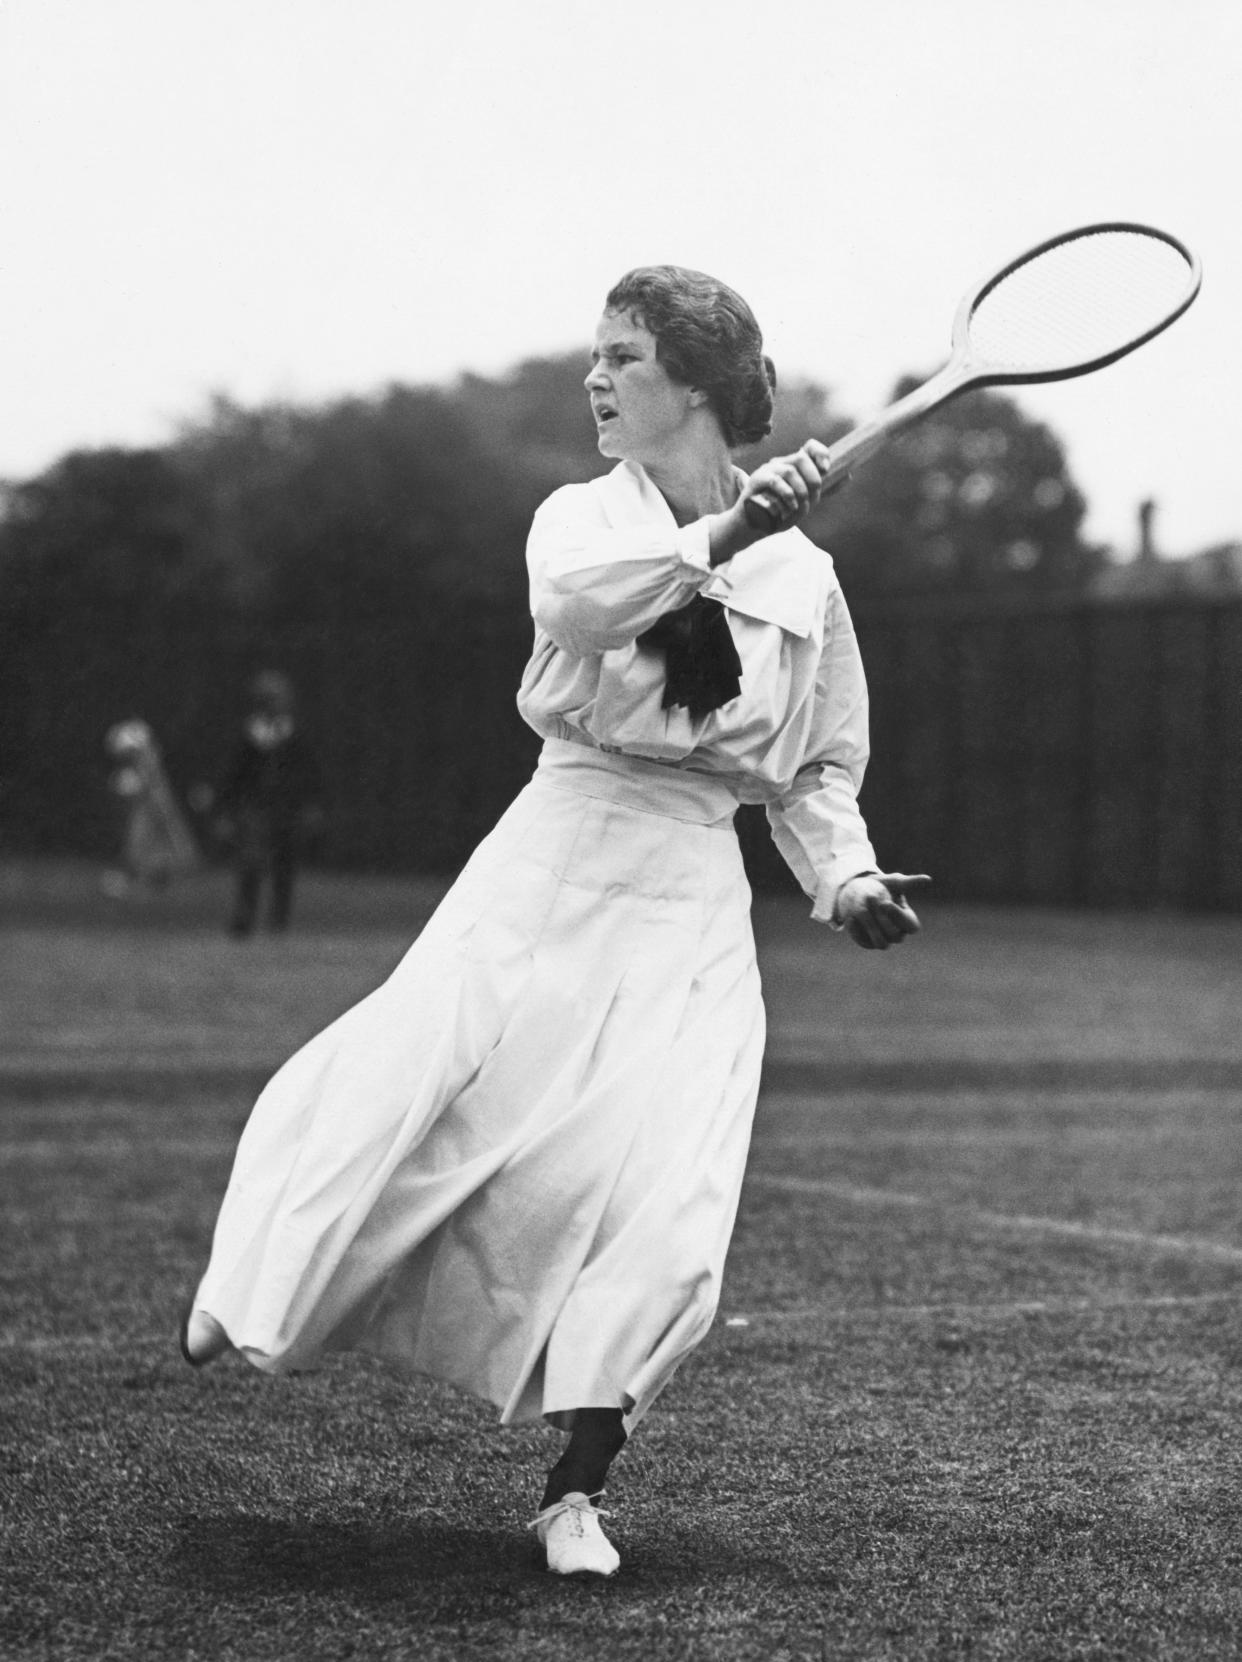 Woman swinging tennis racket circa 1900